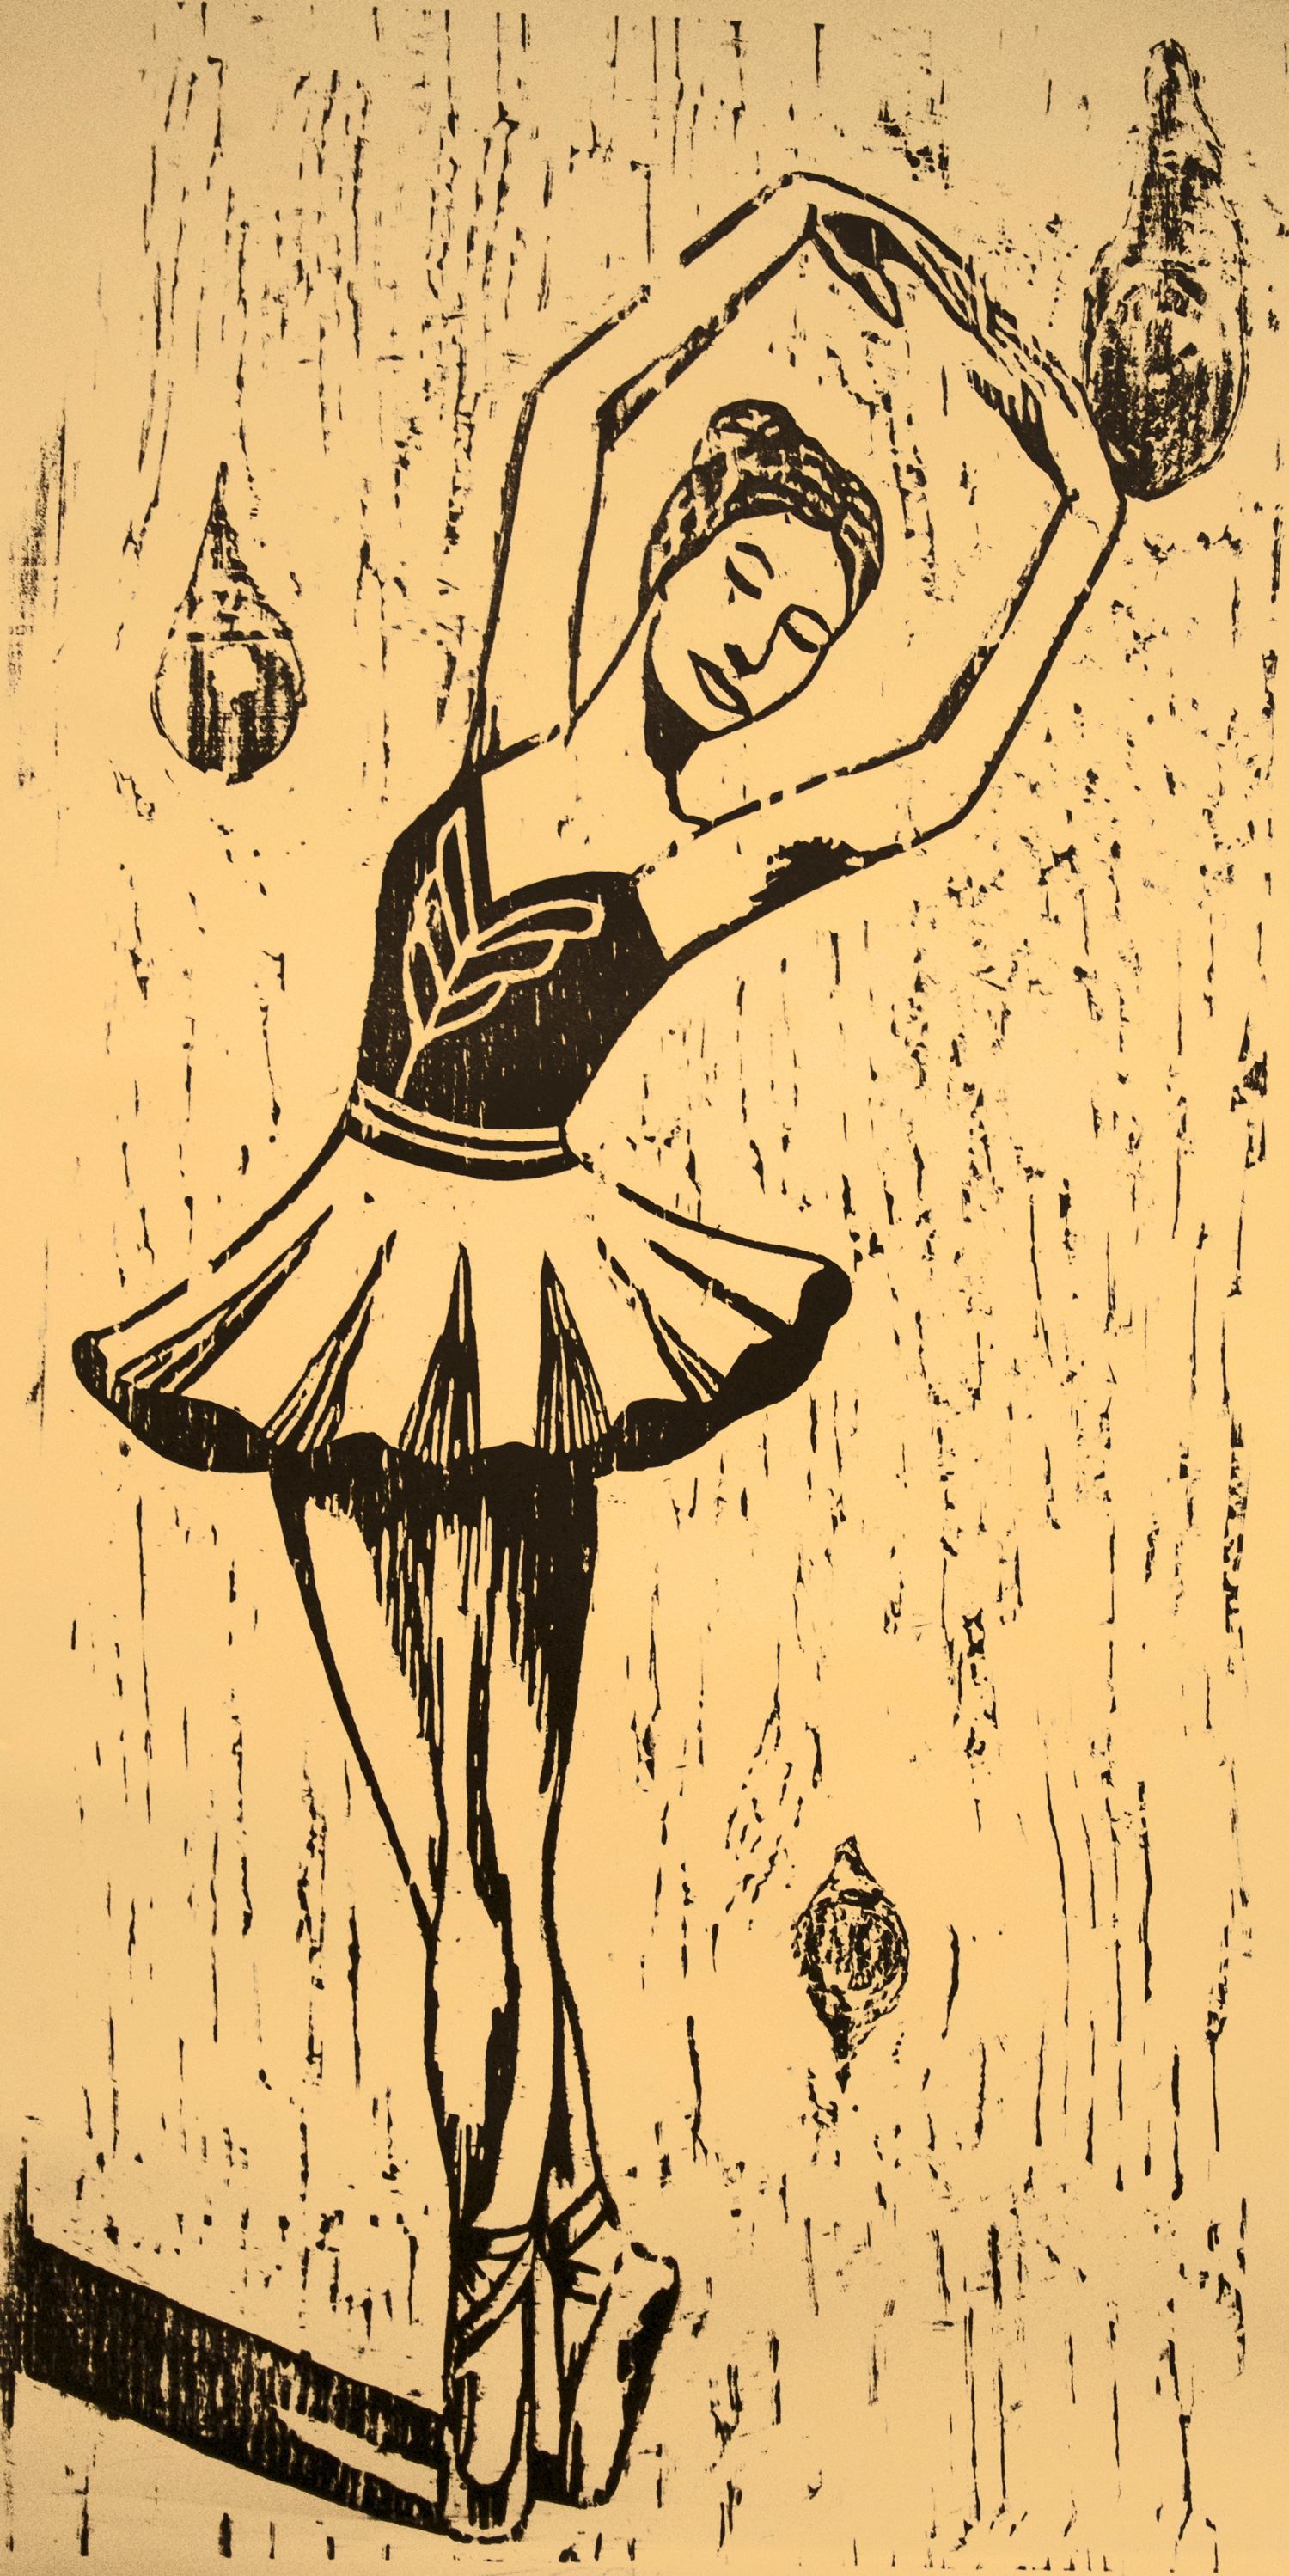 Ballerina, woodcut print, by Tara Marolf